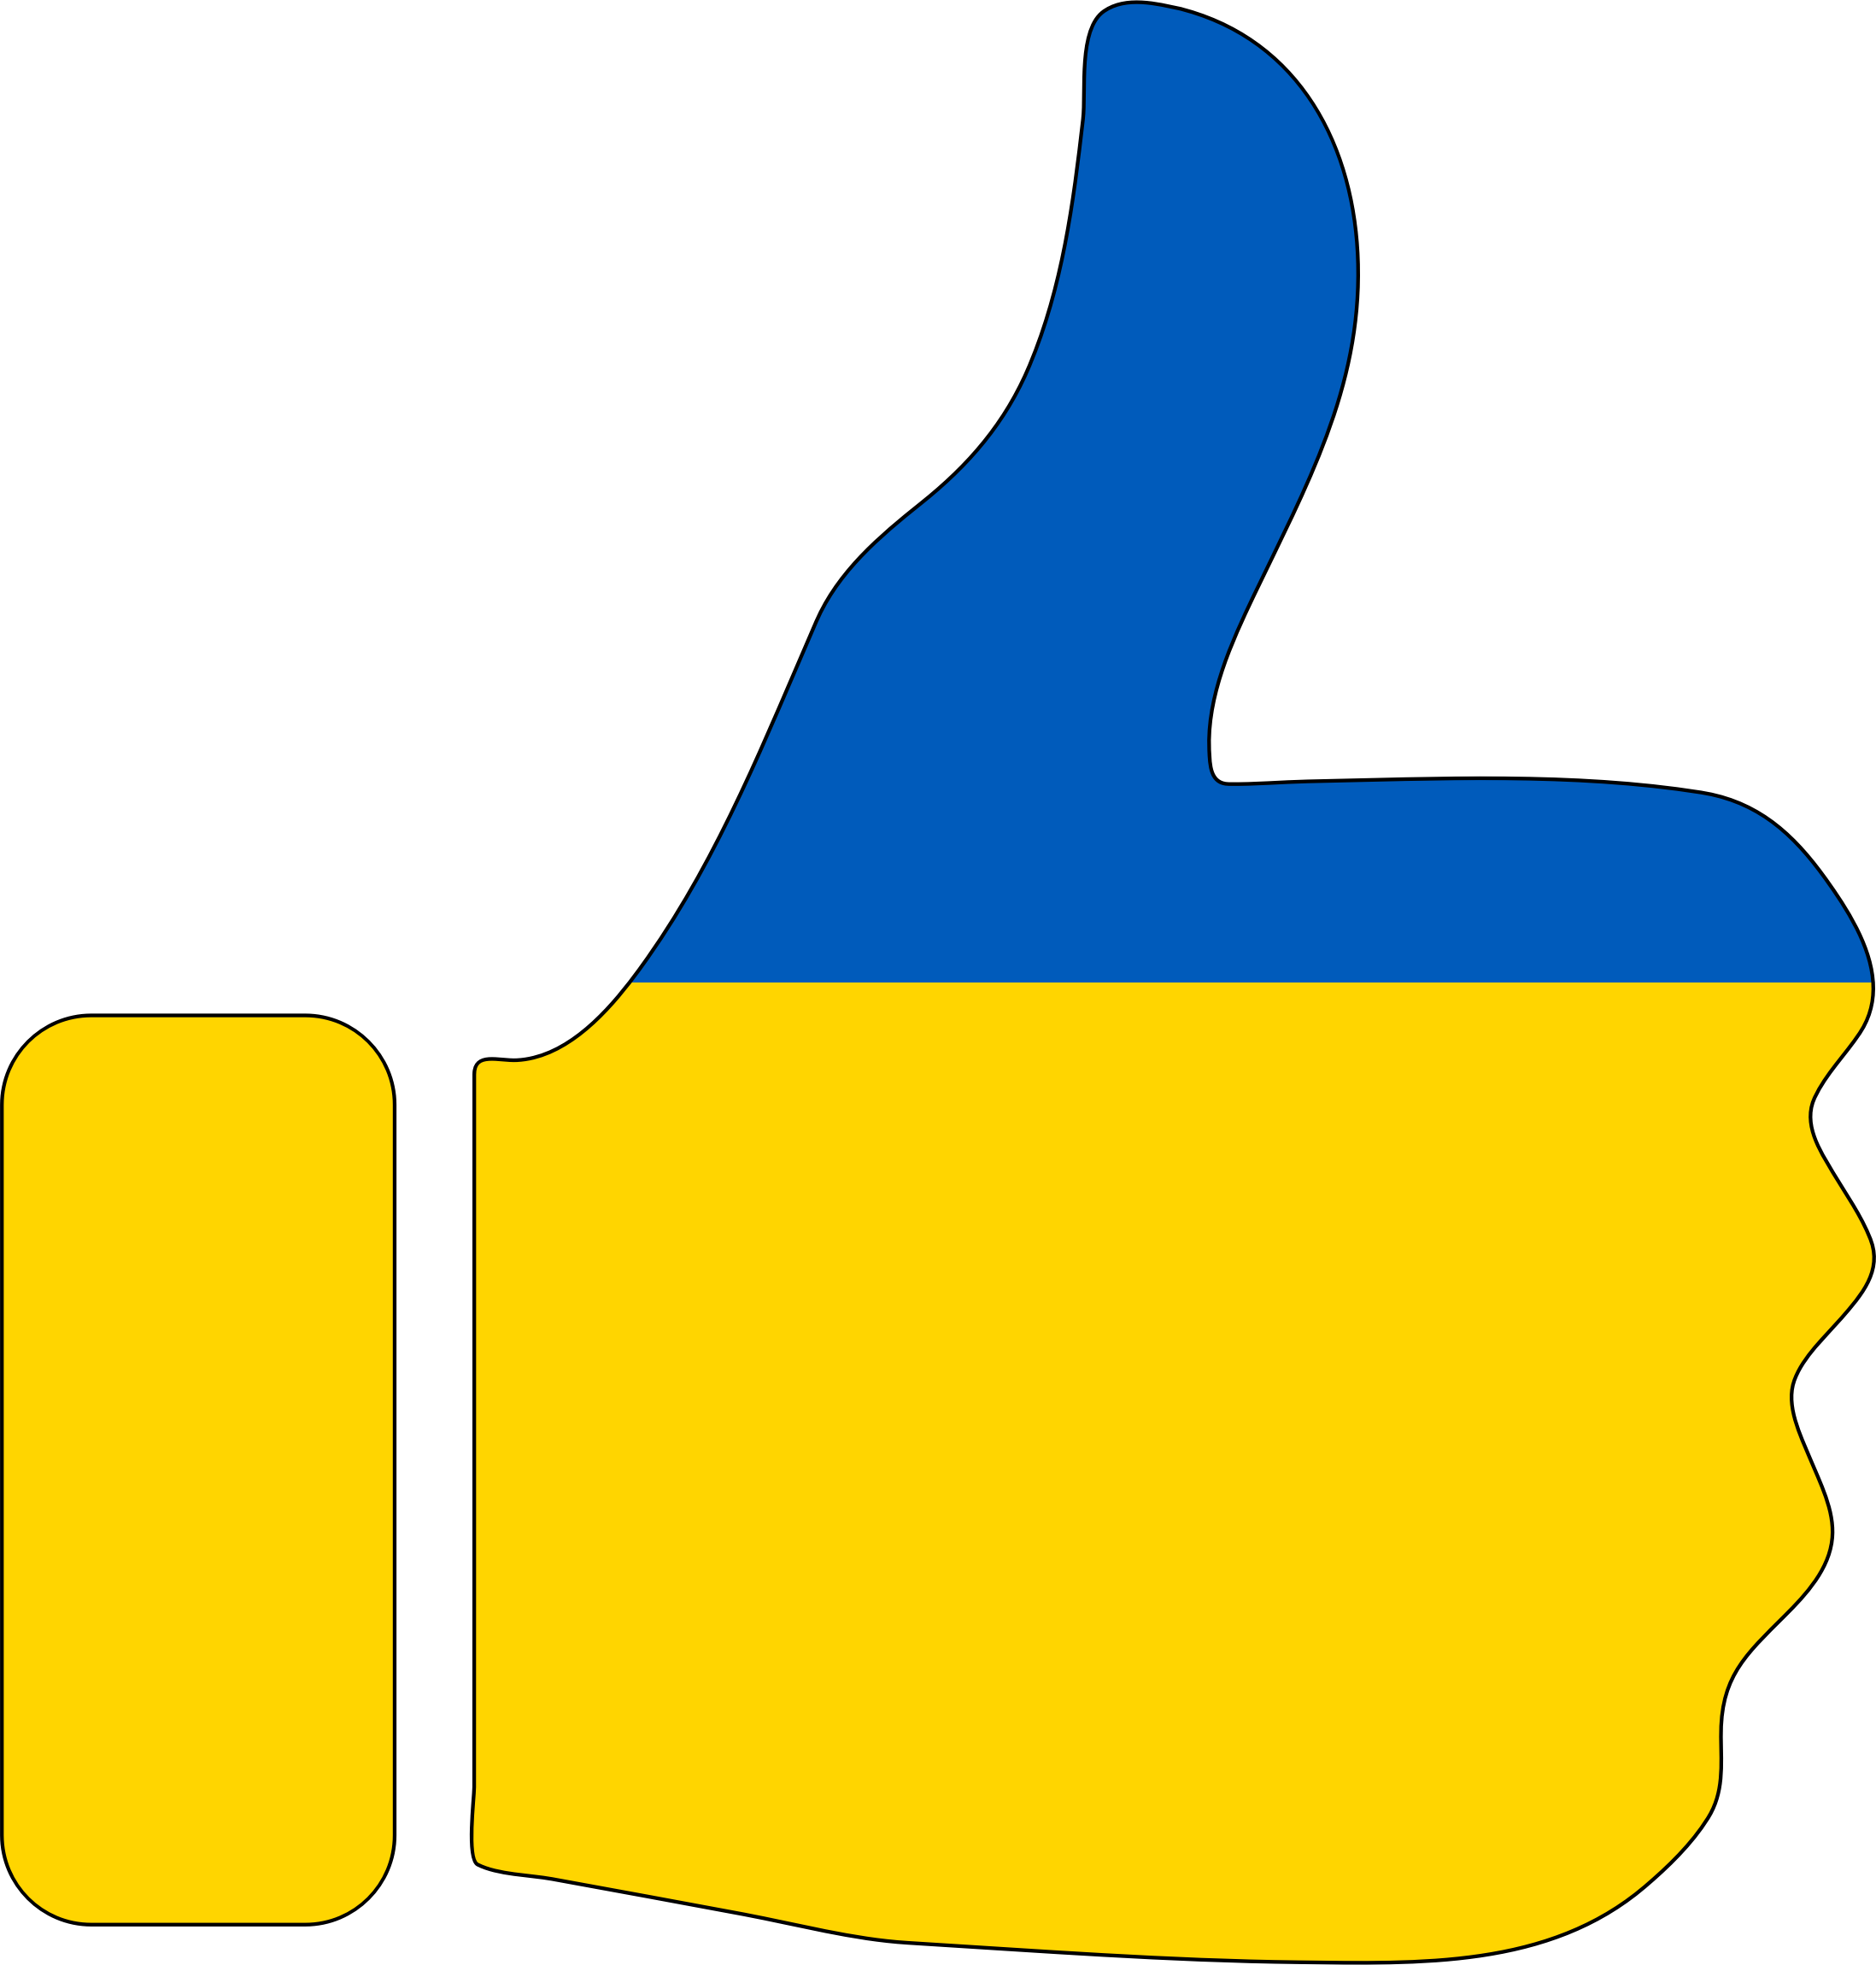 Big Image (Png) - Ukraine, Transparent background PNG HD thumbnail